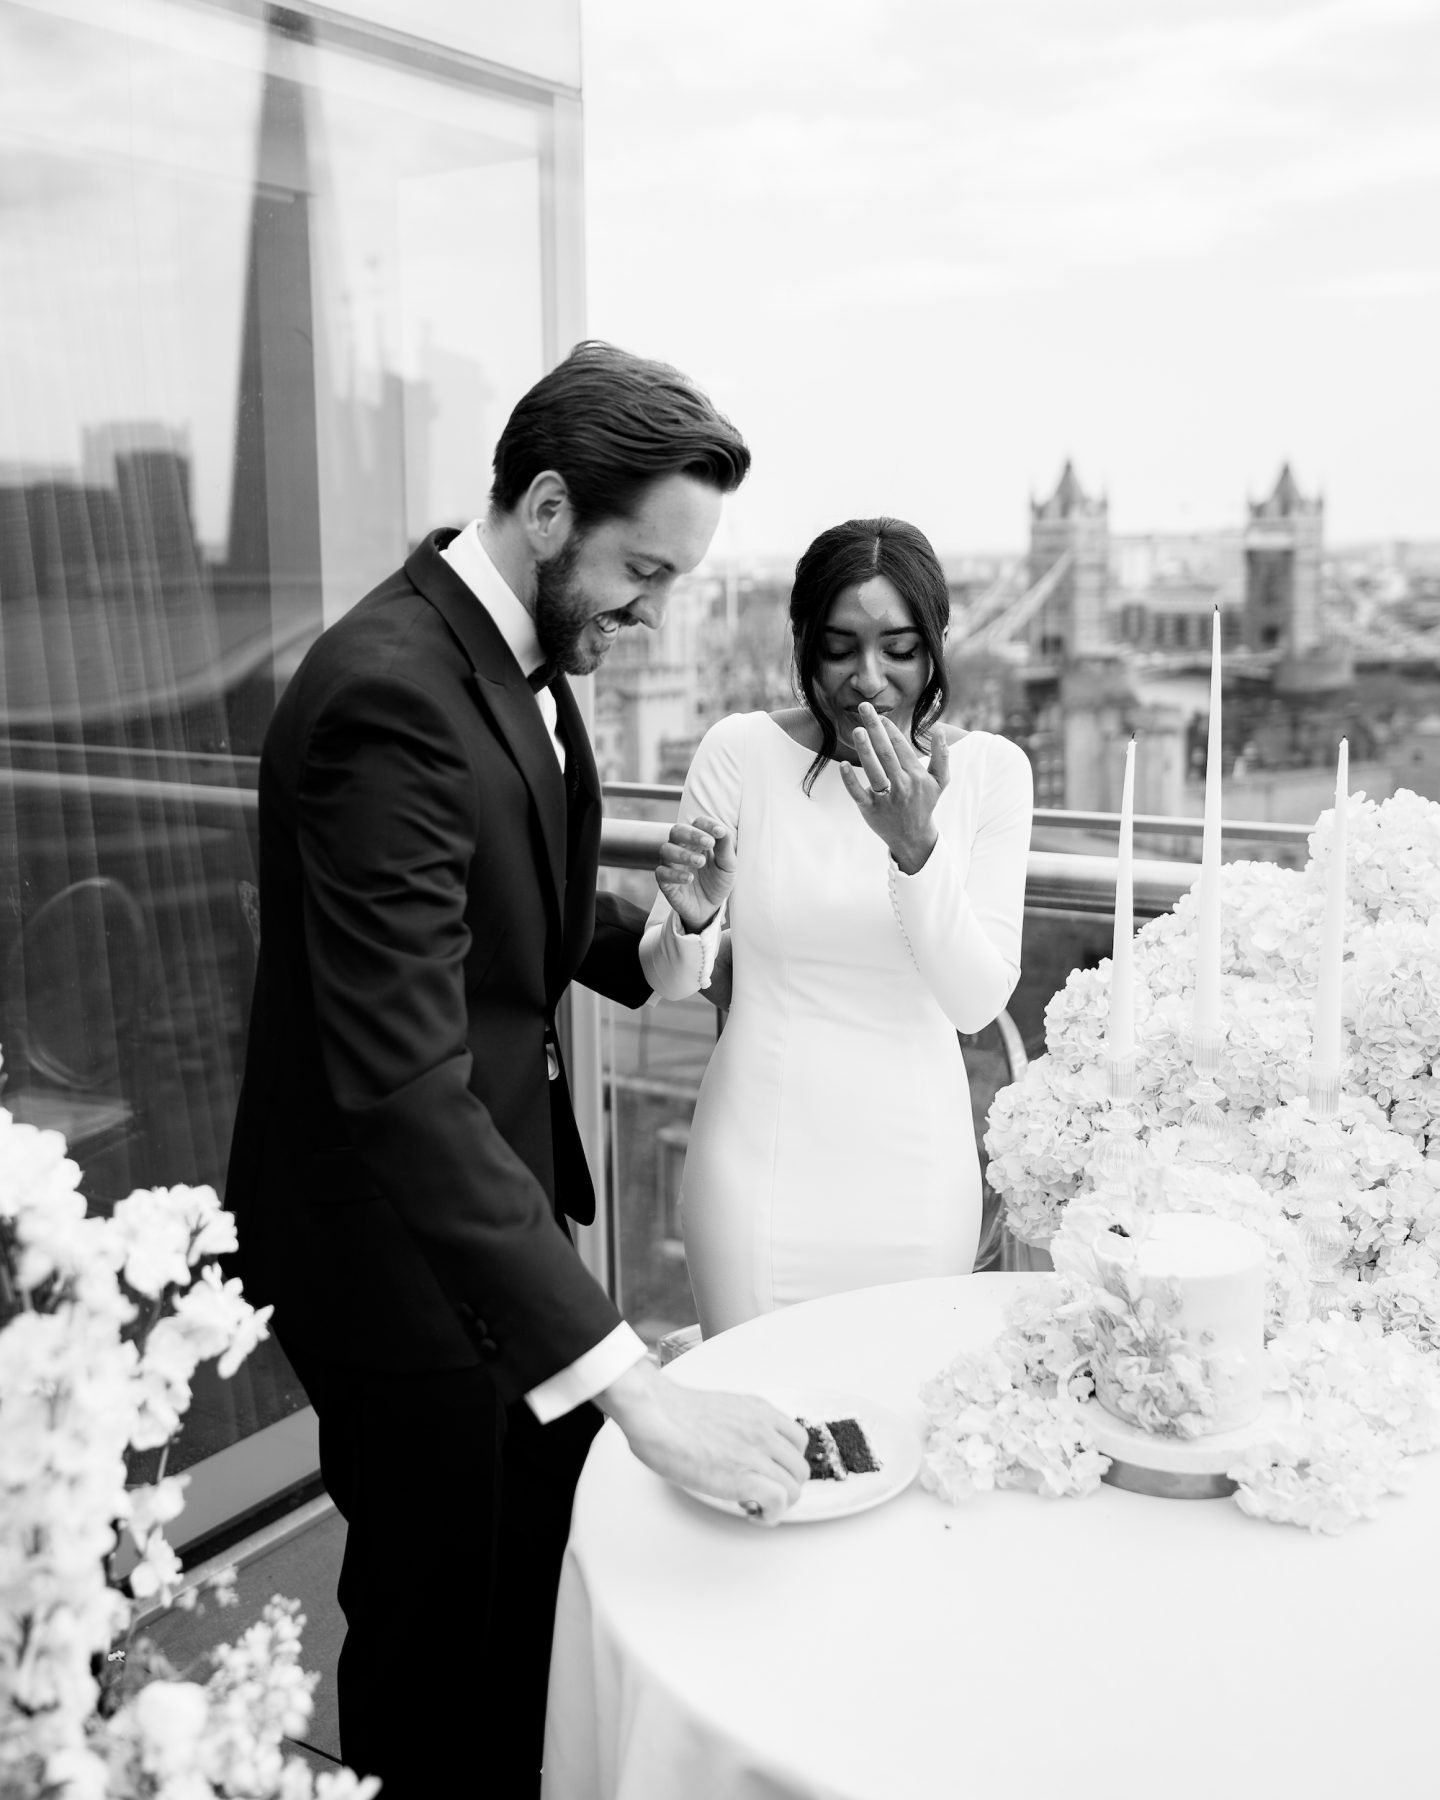 Luxe-London-Wedding20-1440x1800.jpg